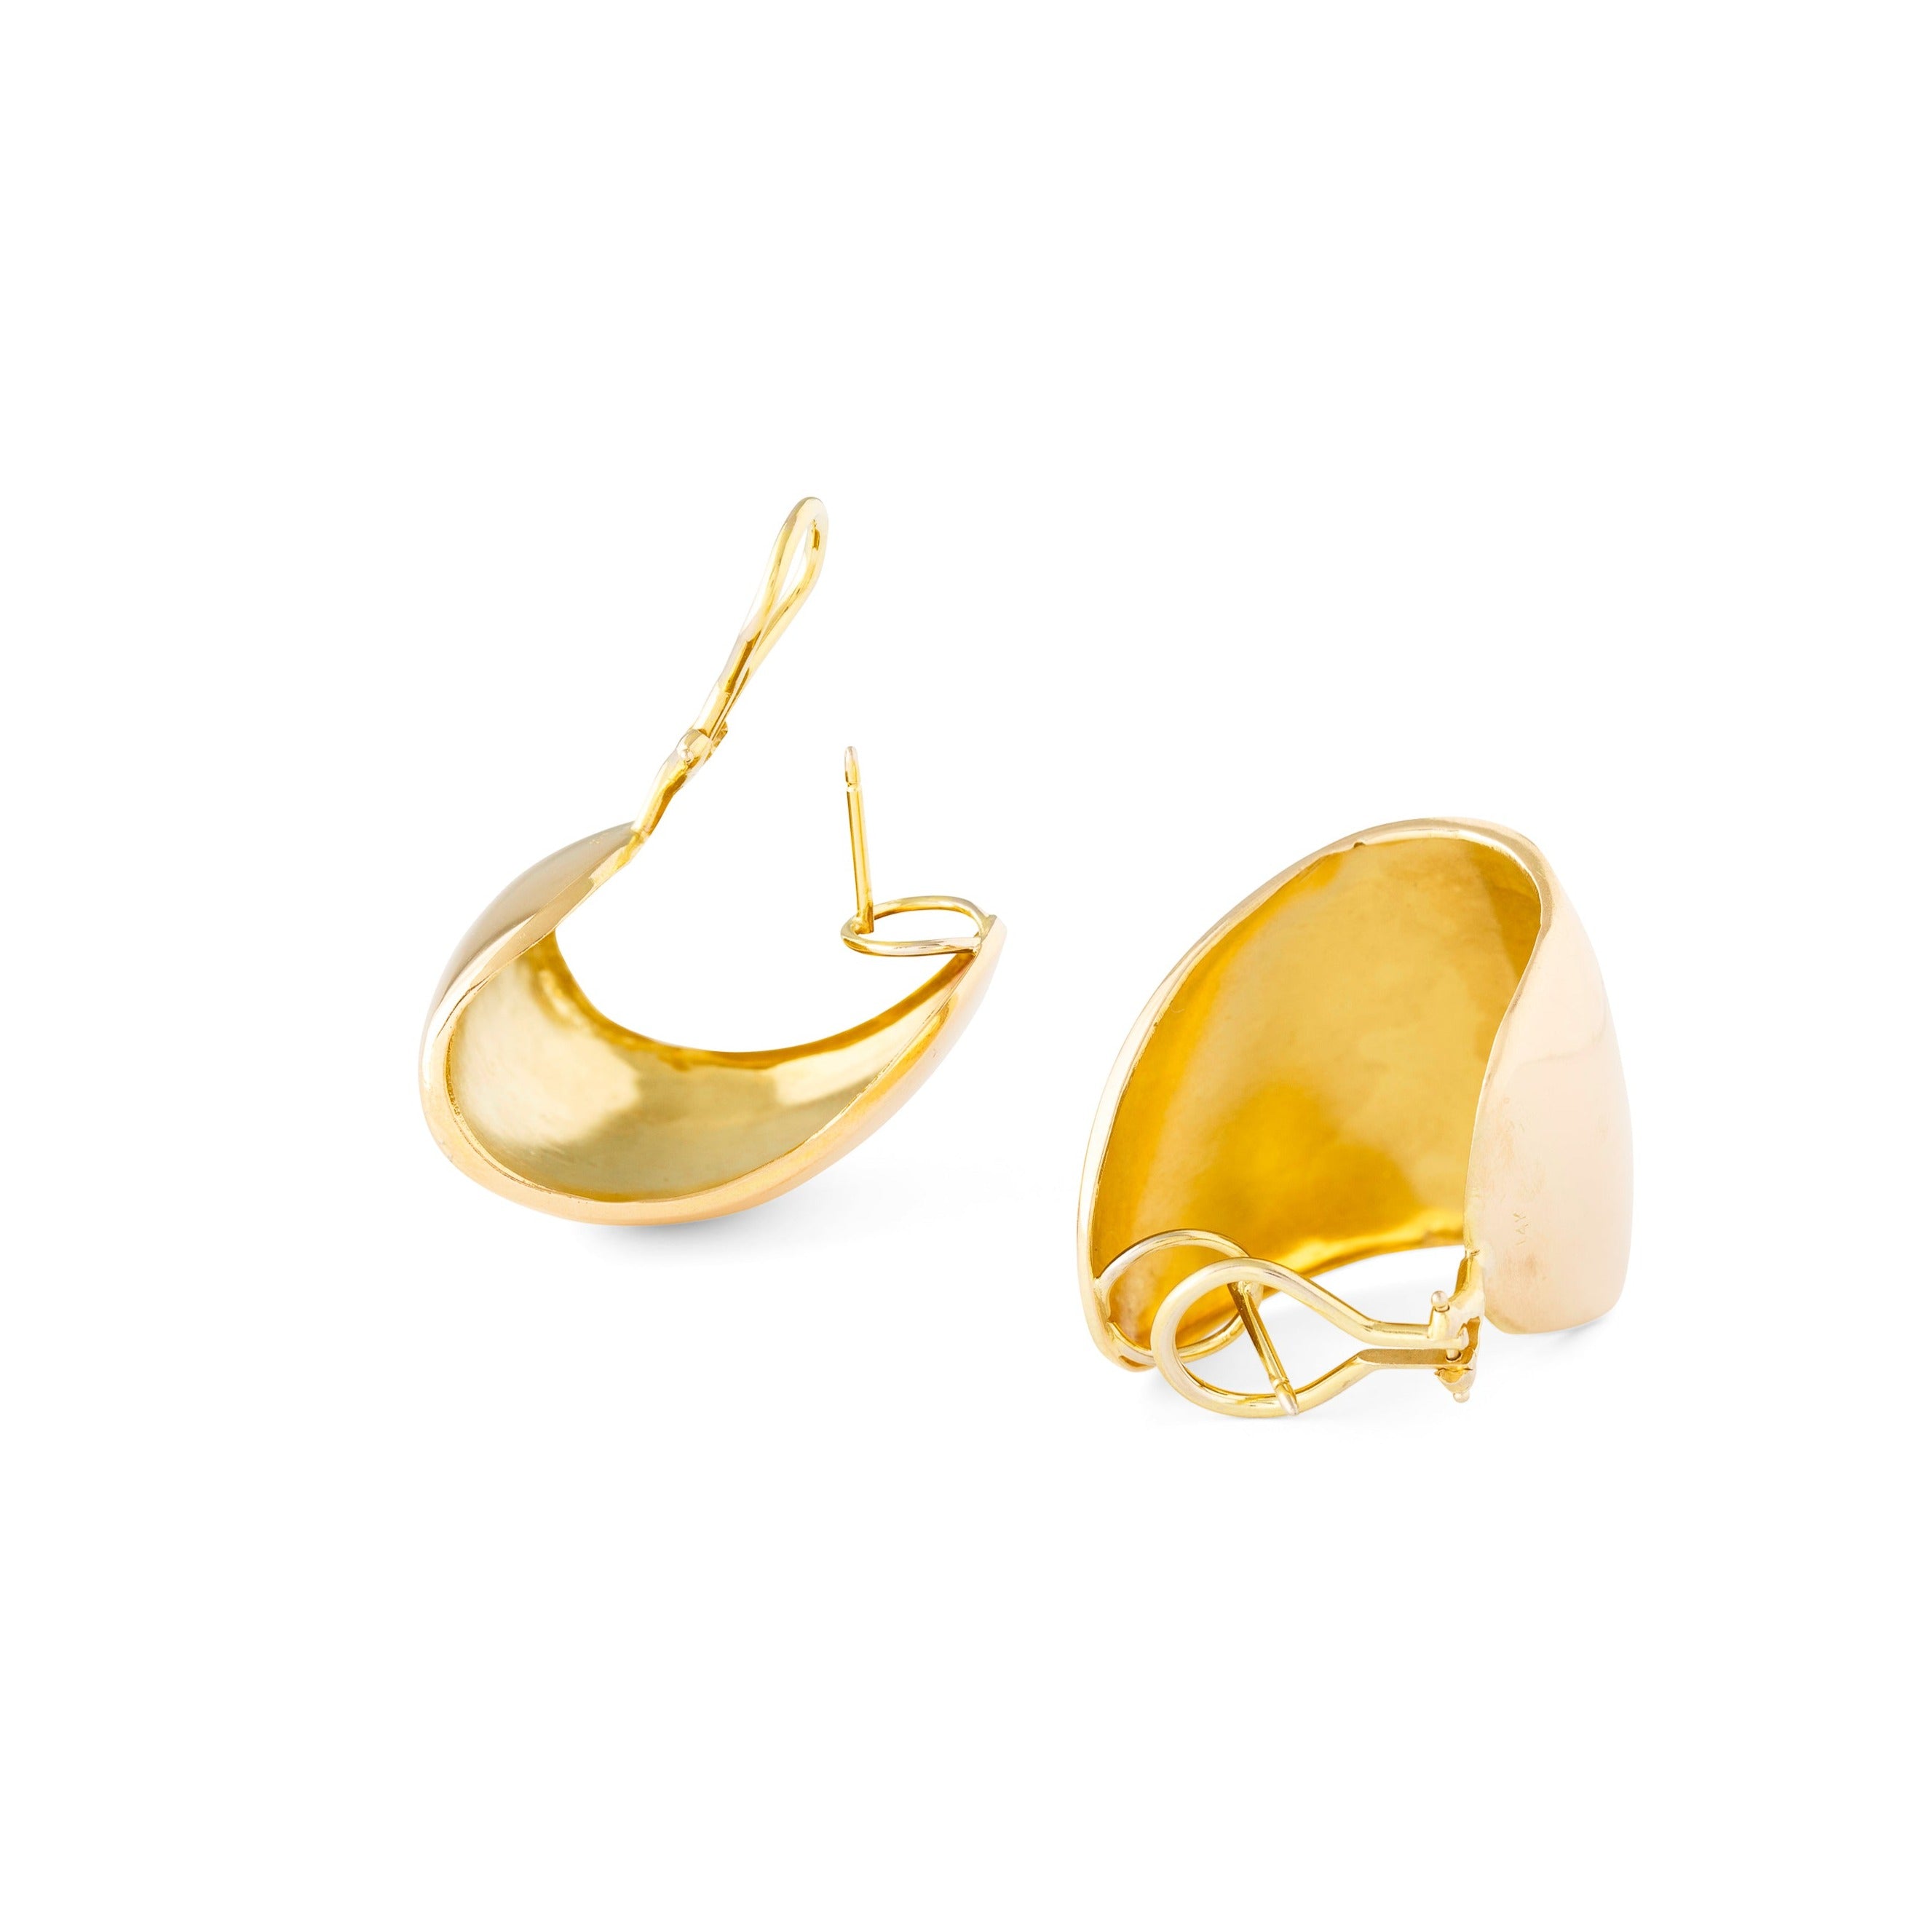 Large 14k Gold Folded Hoop Earrings